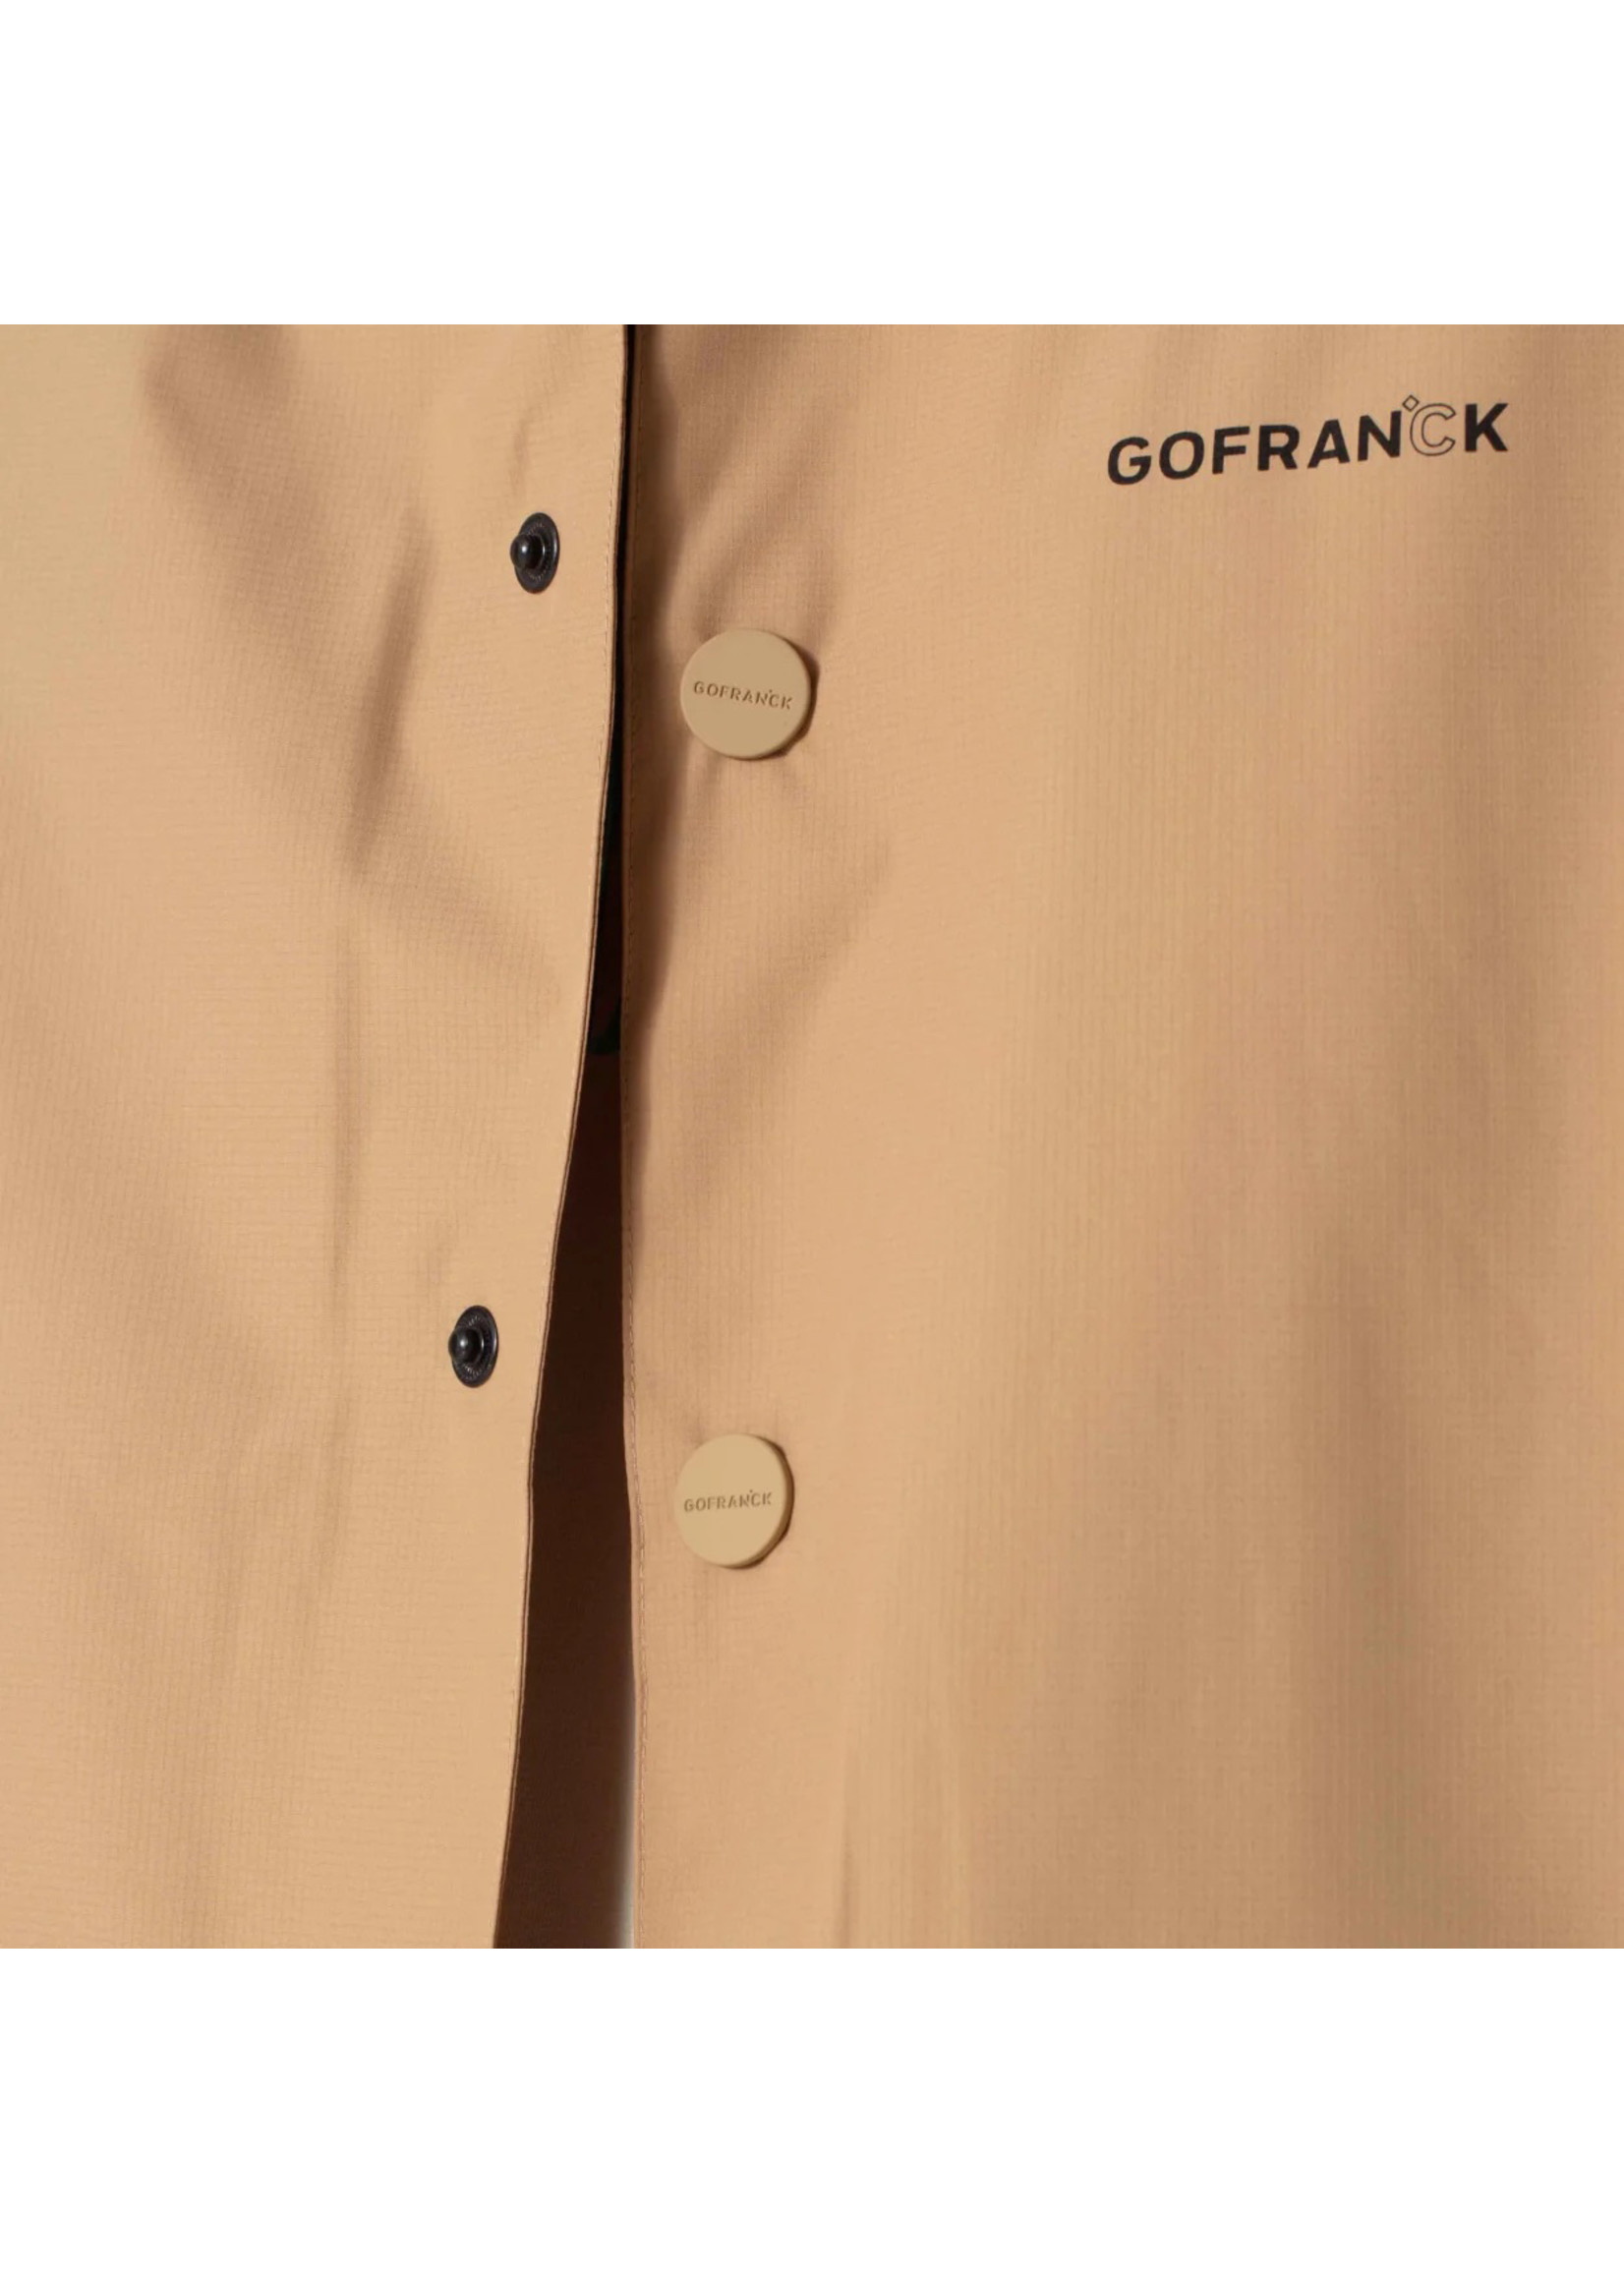 GOFranck Heat Wave Jacket | S, M & L